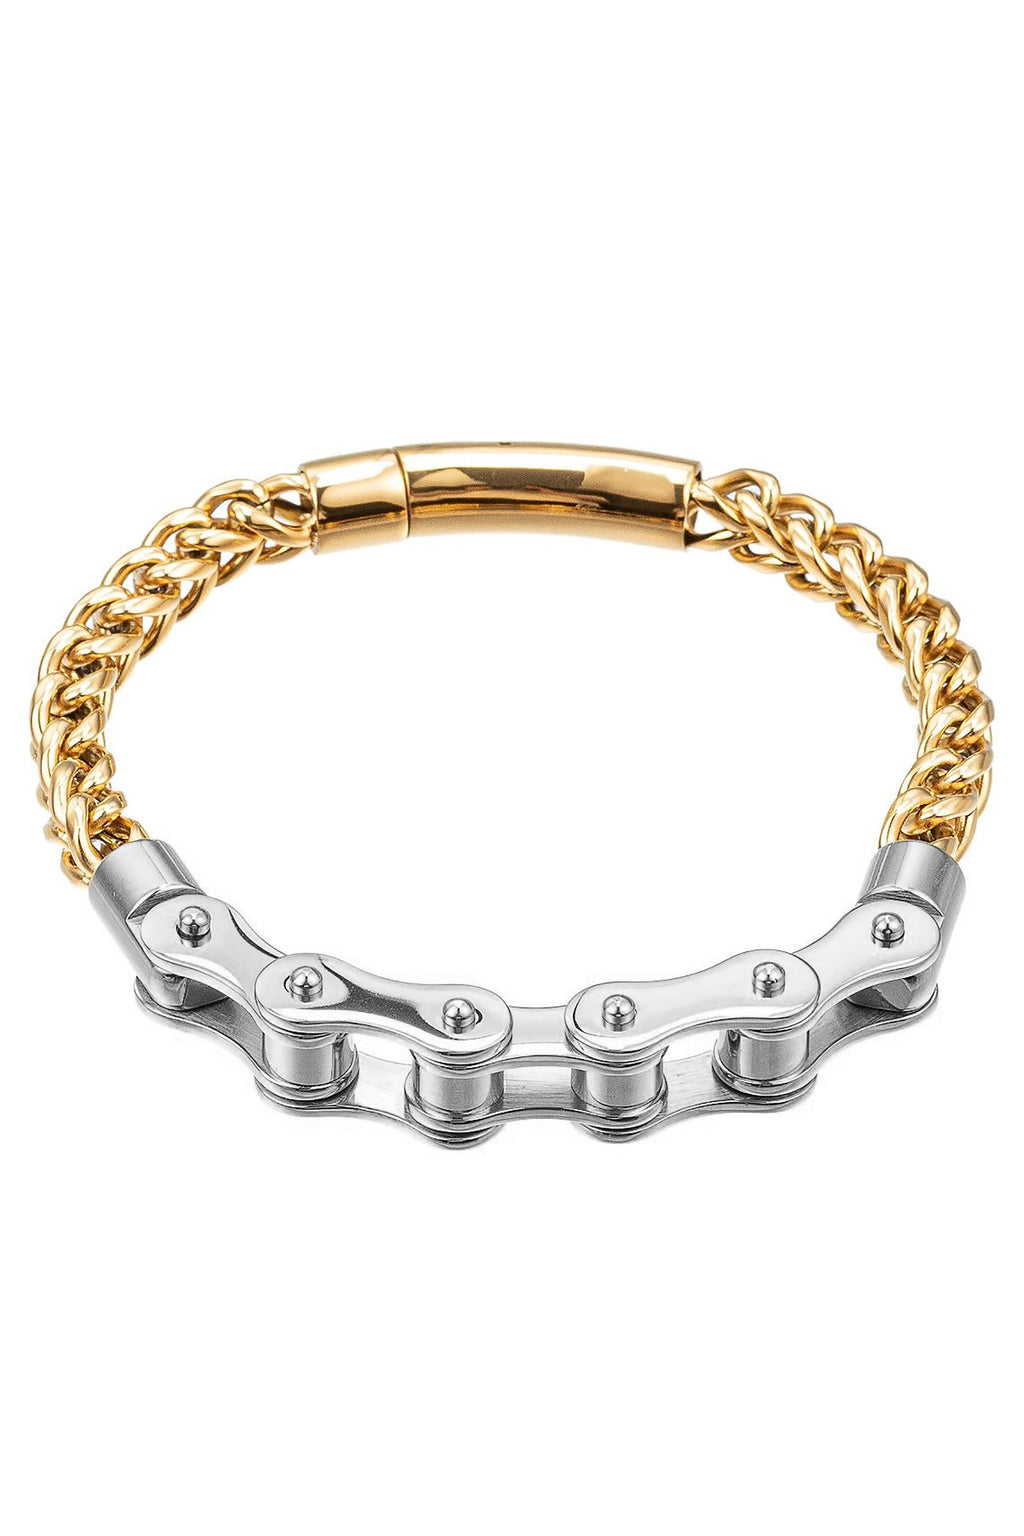 Alexandre 2-Tone Bike Chain Bracelet: Rev Up Your Fashion Game with Modern Elegance.